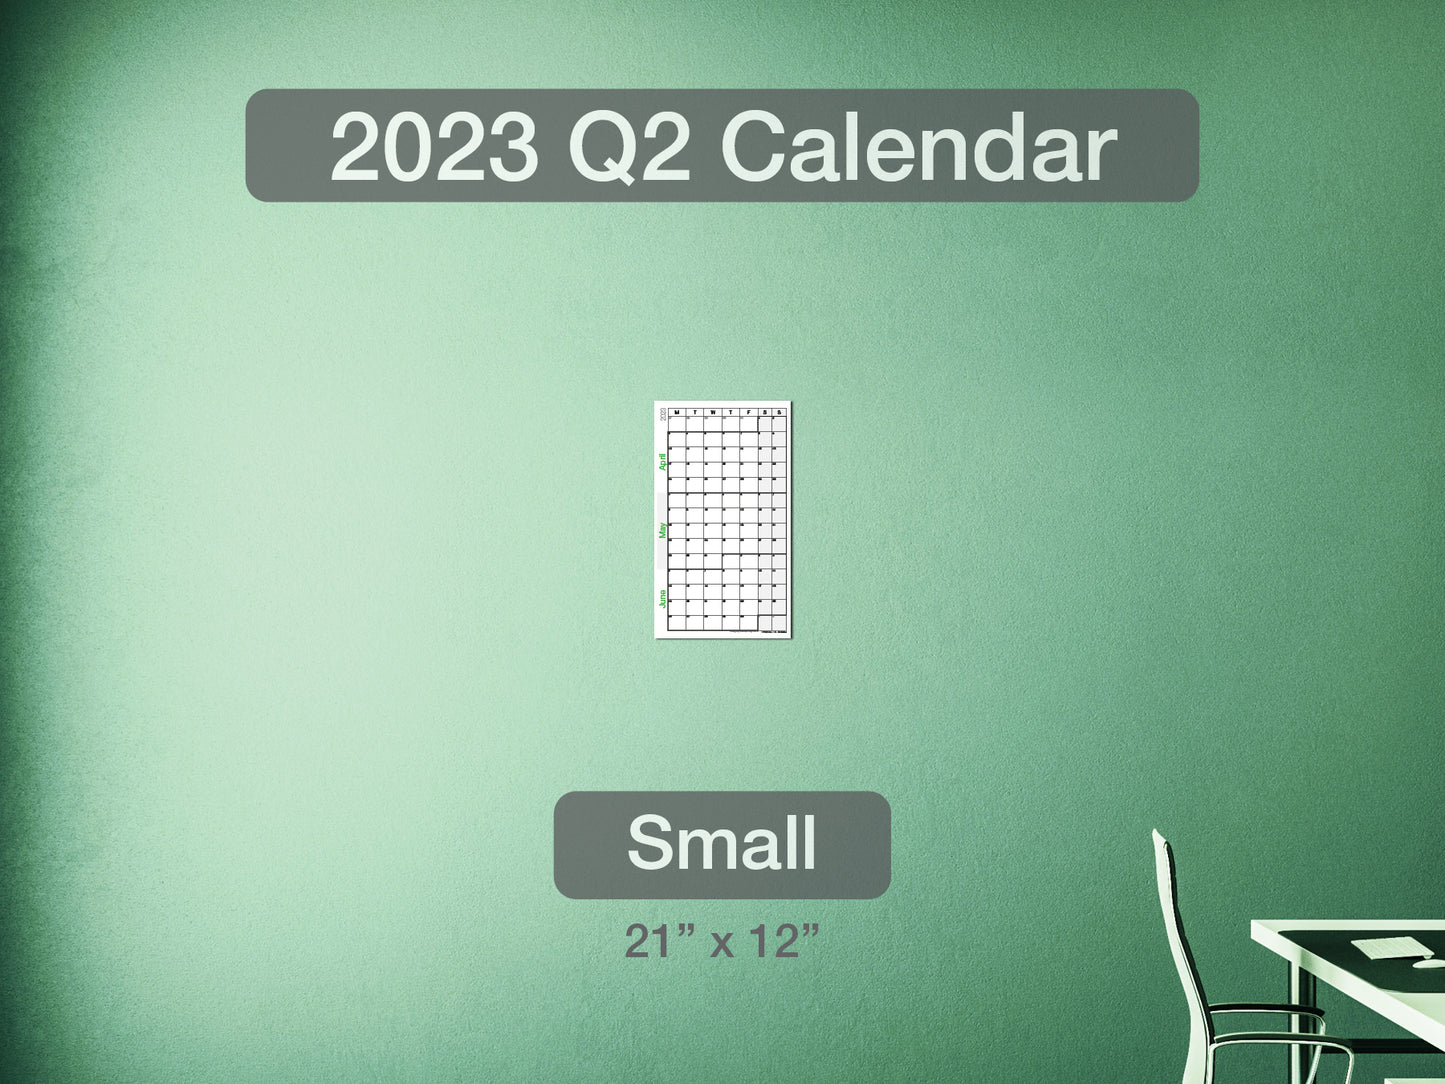 2023 Q2 Calendar Small